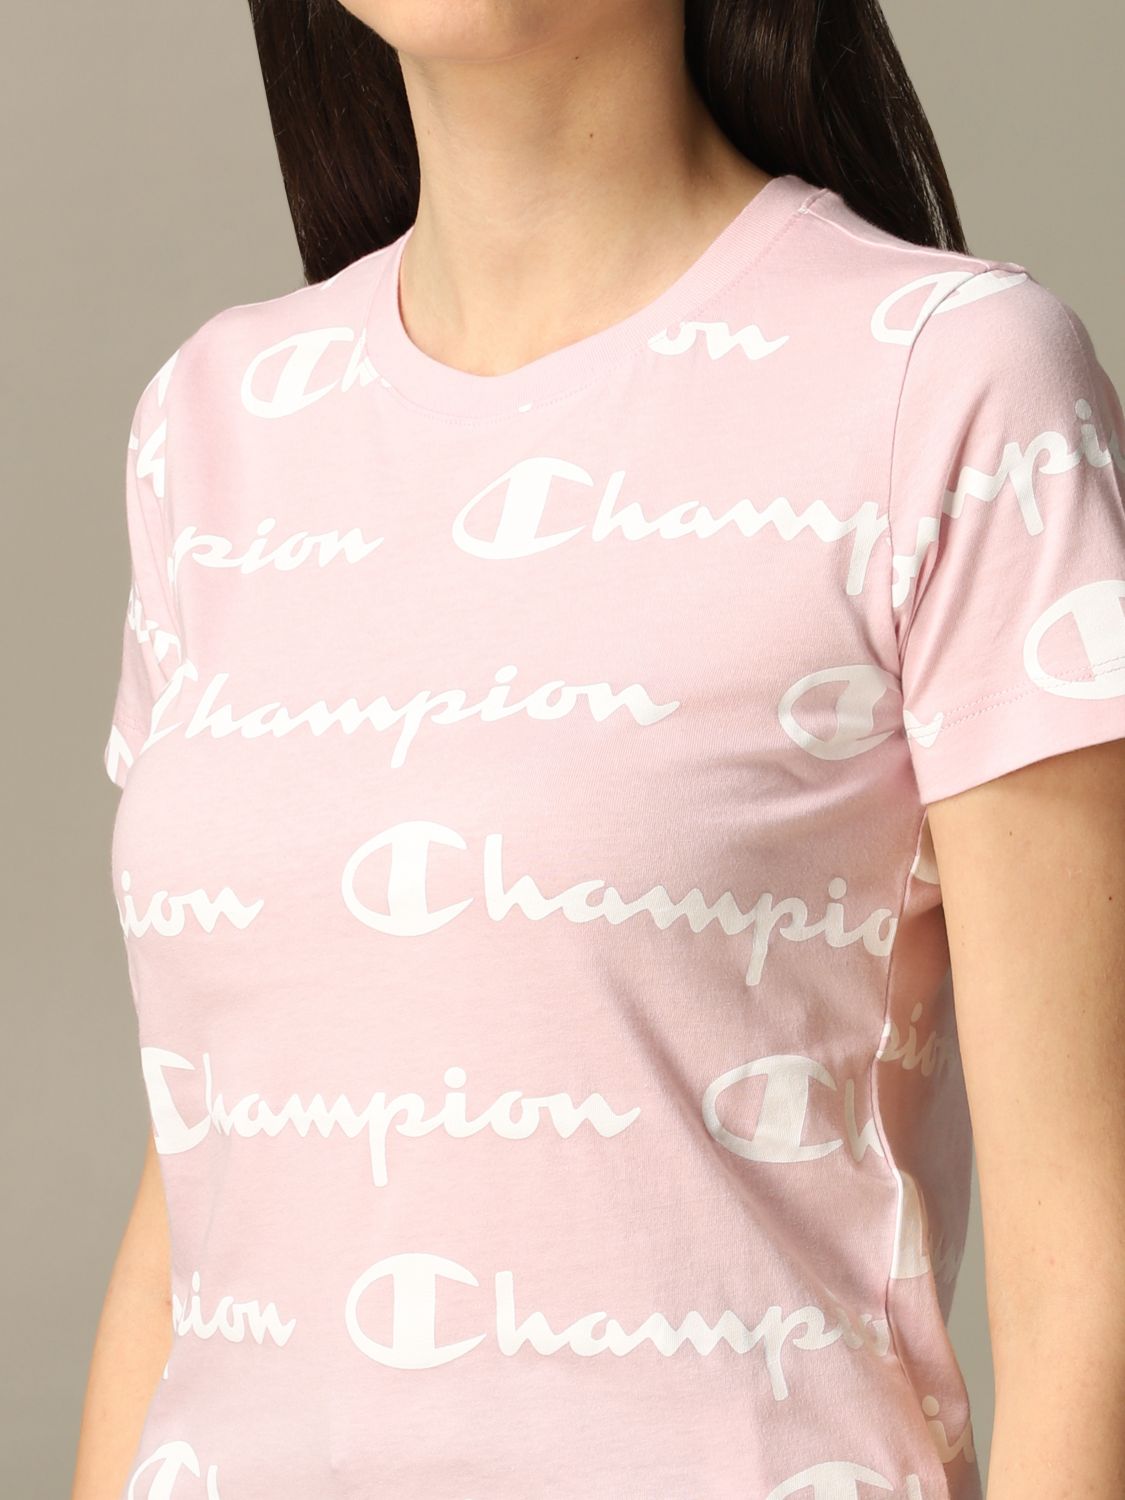 women champion t shirt